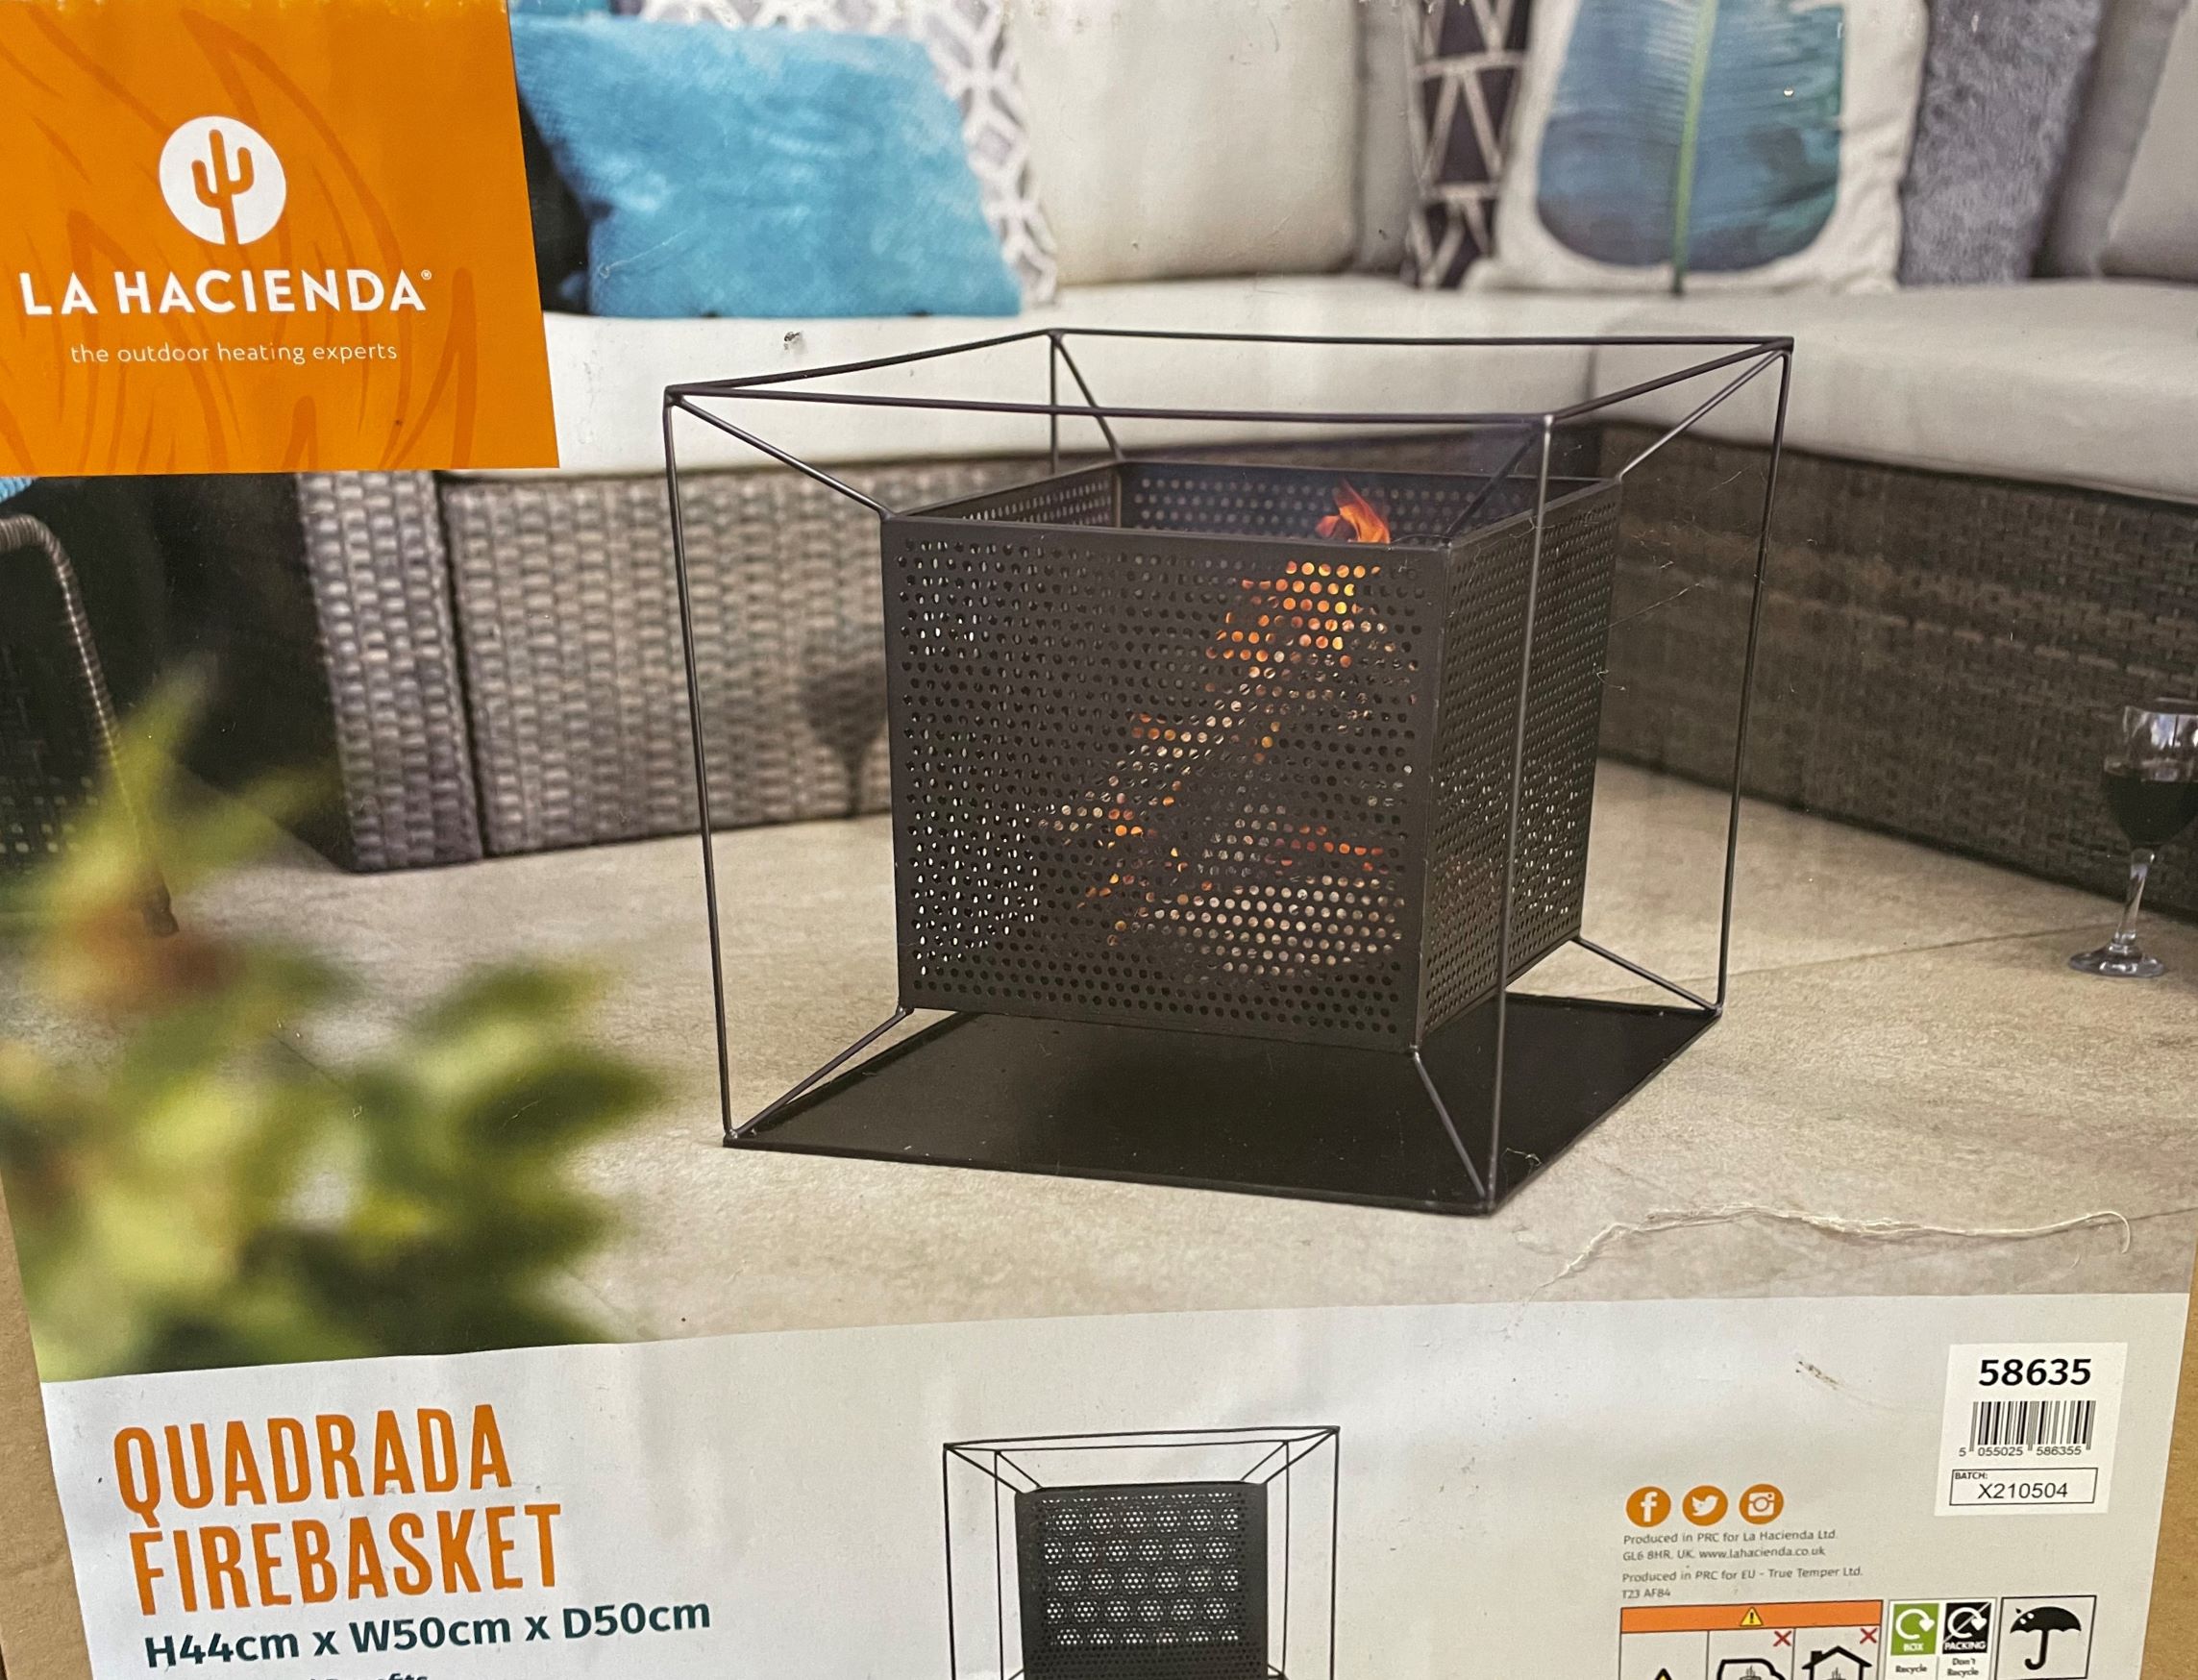 La Hacienda Quadrada fire basket - unused & boxed